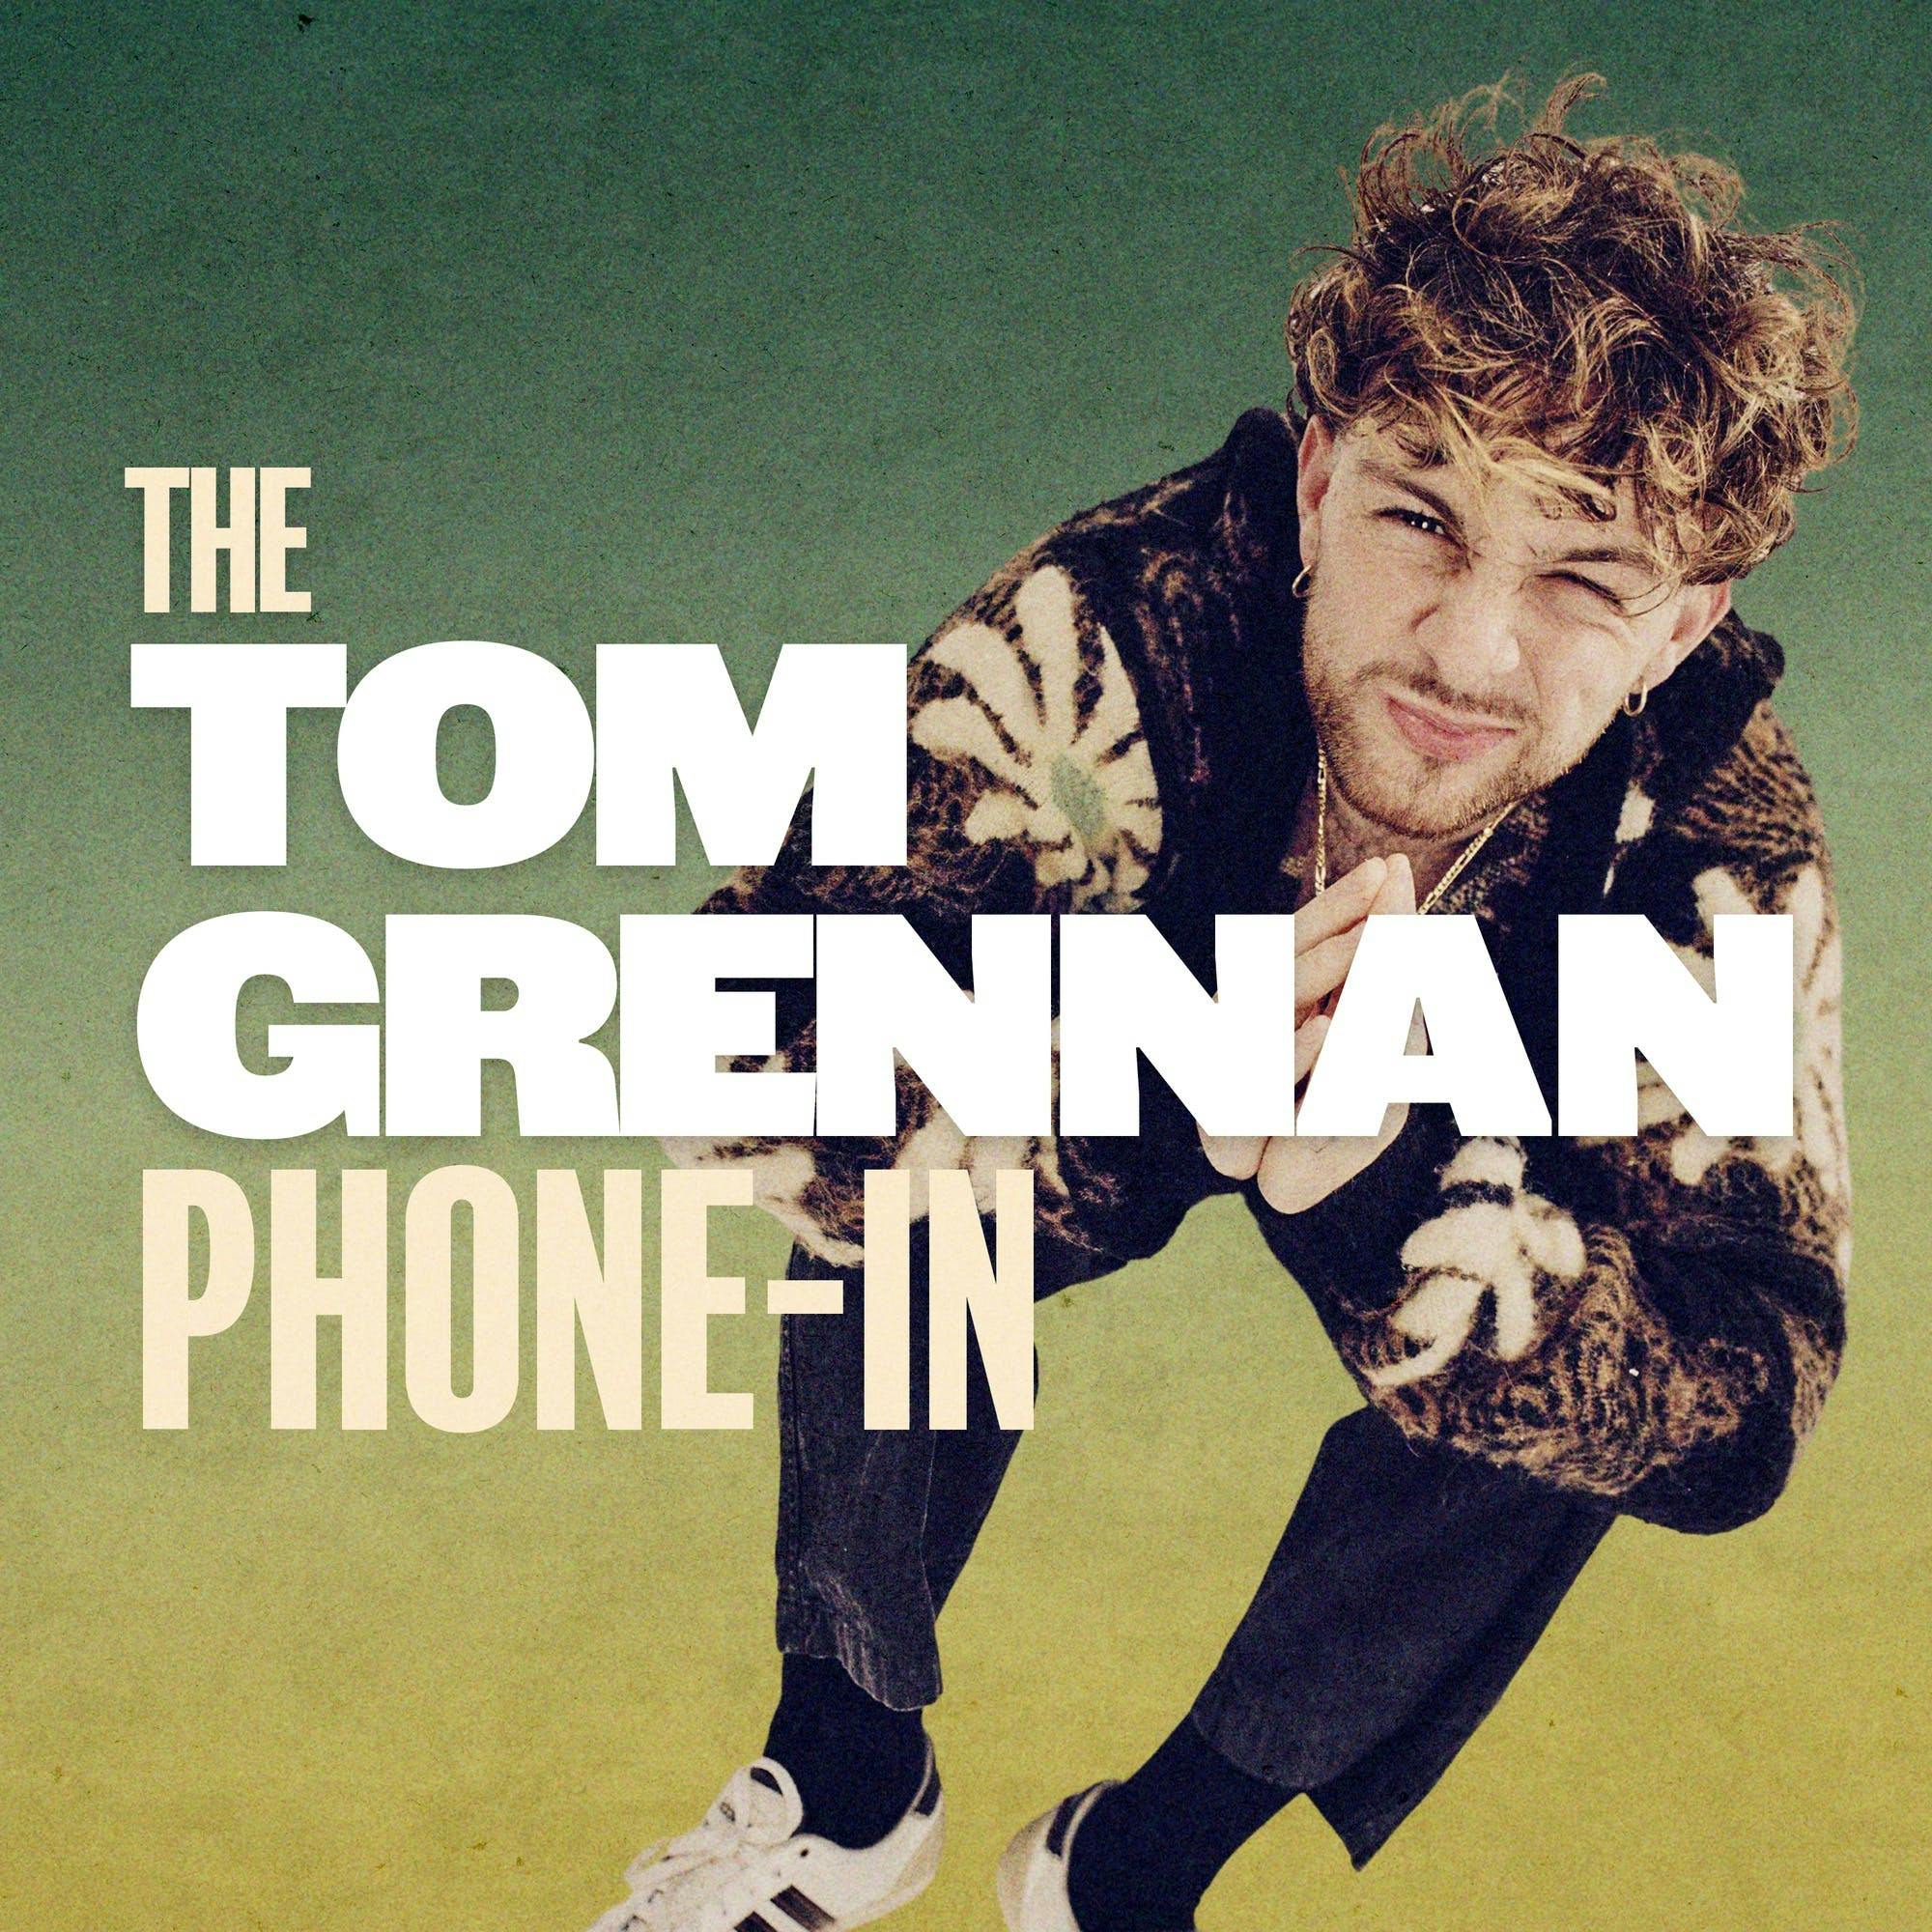 The Tom Grennan Phone In